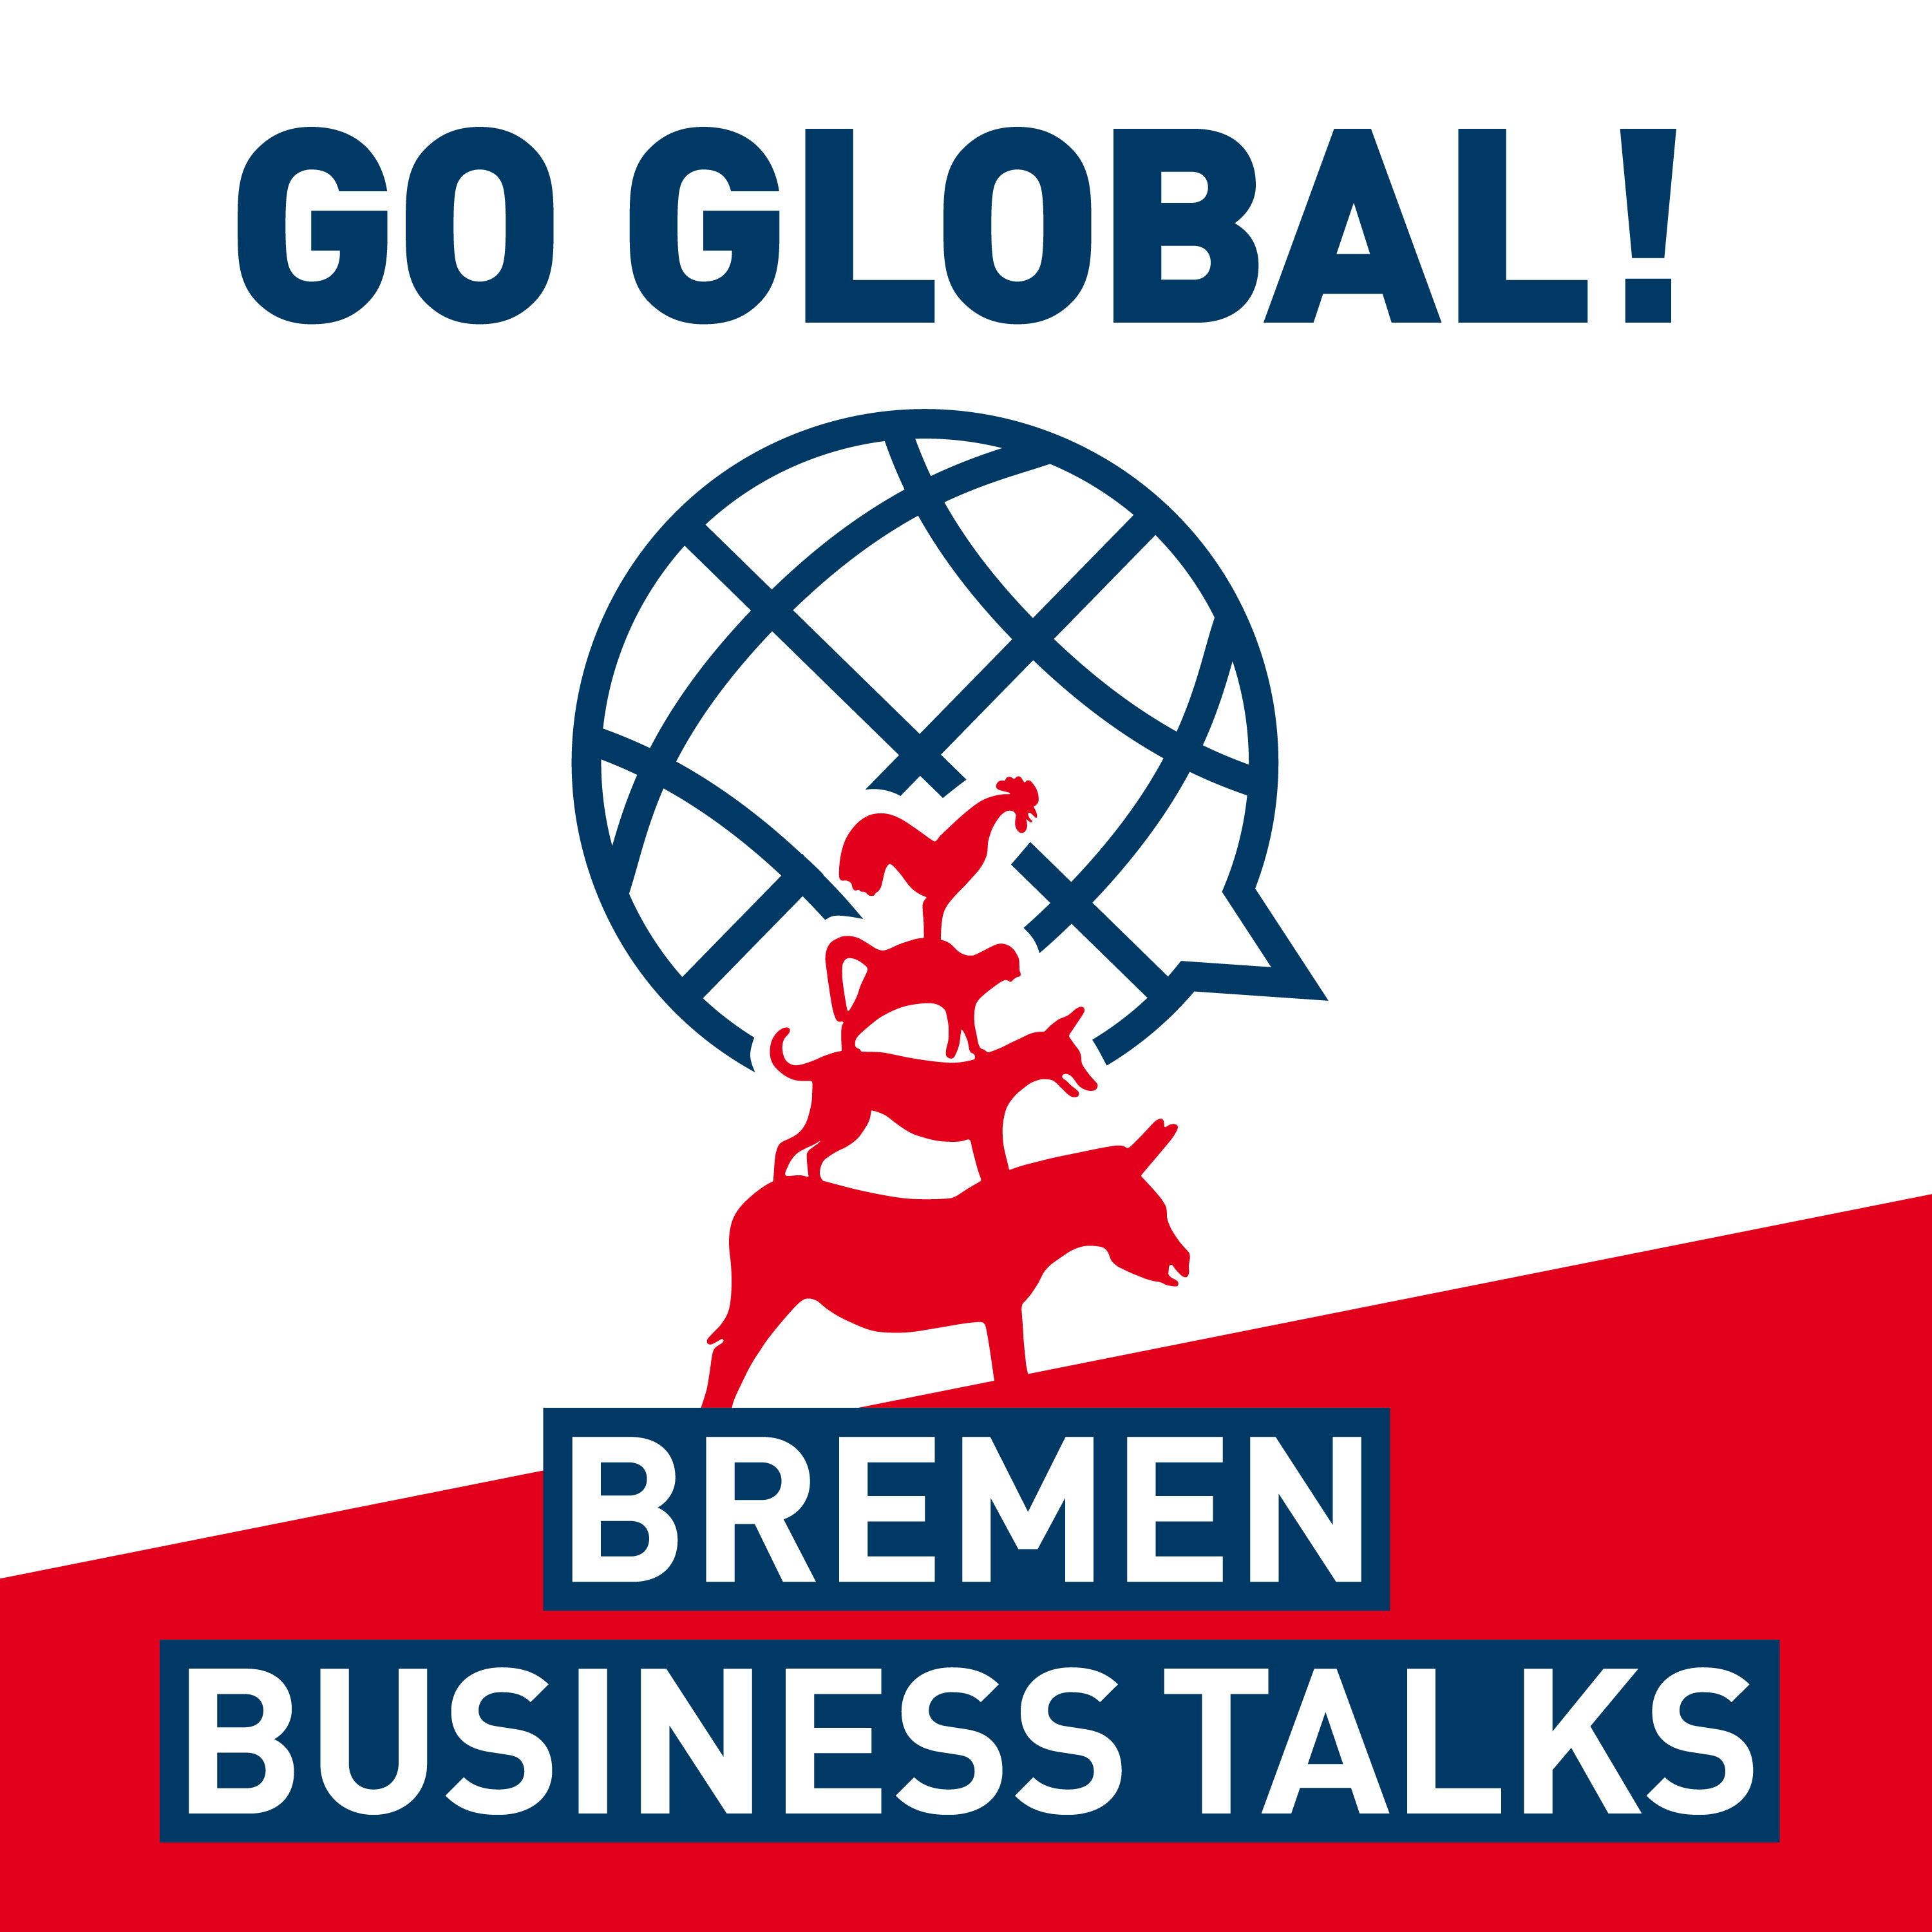 Go Global! Bremen Business Talks